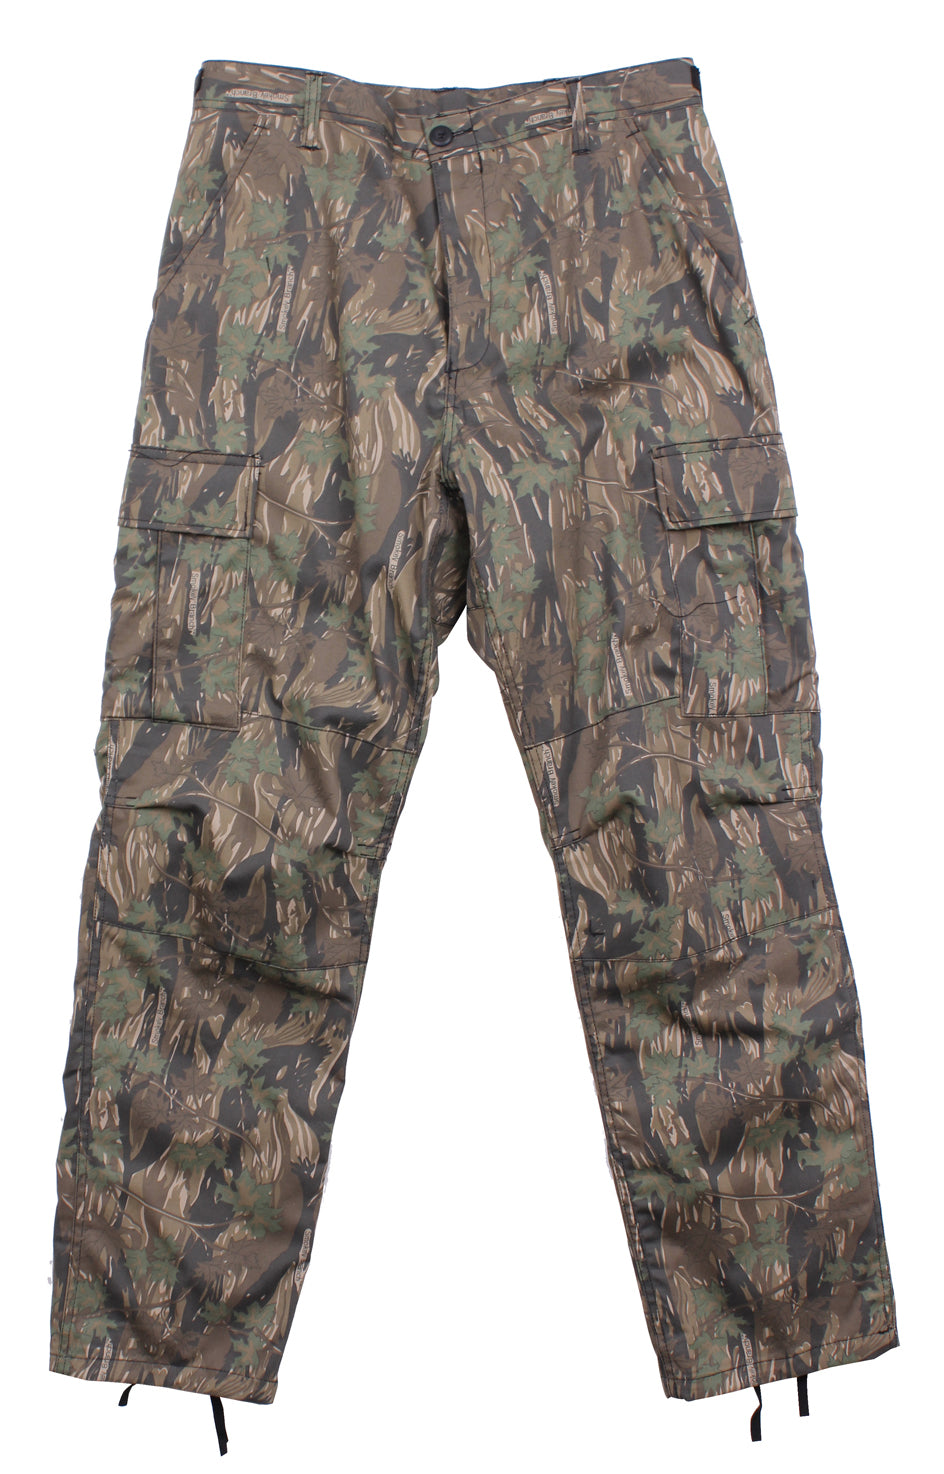 Mens Smokey Branch Camouflage GI Style BDU Cargo Pants - Rothco 8855